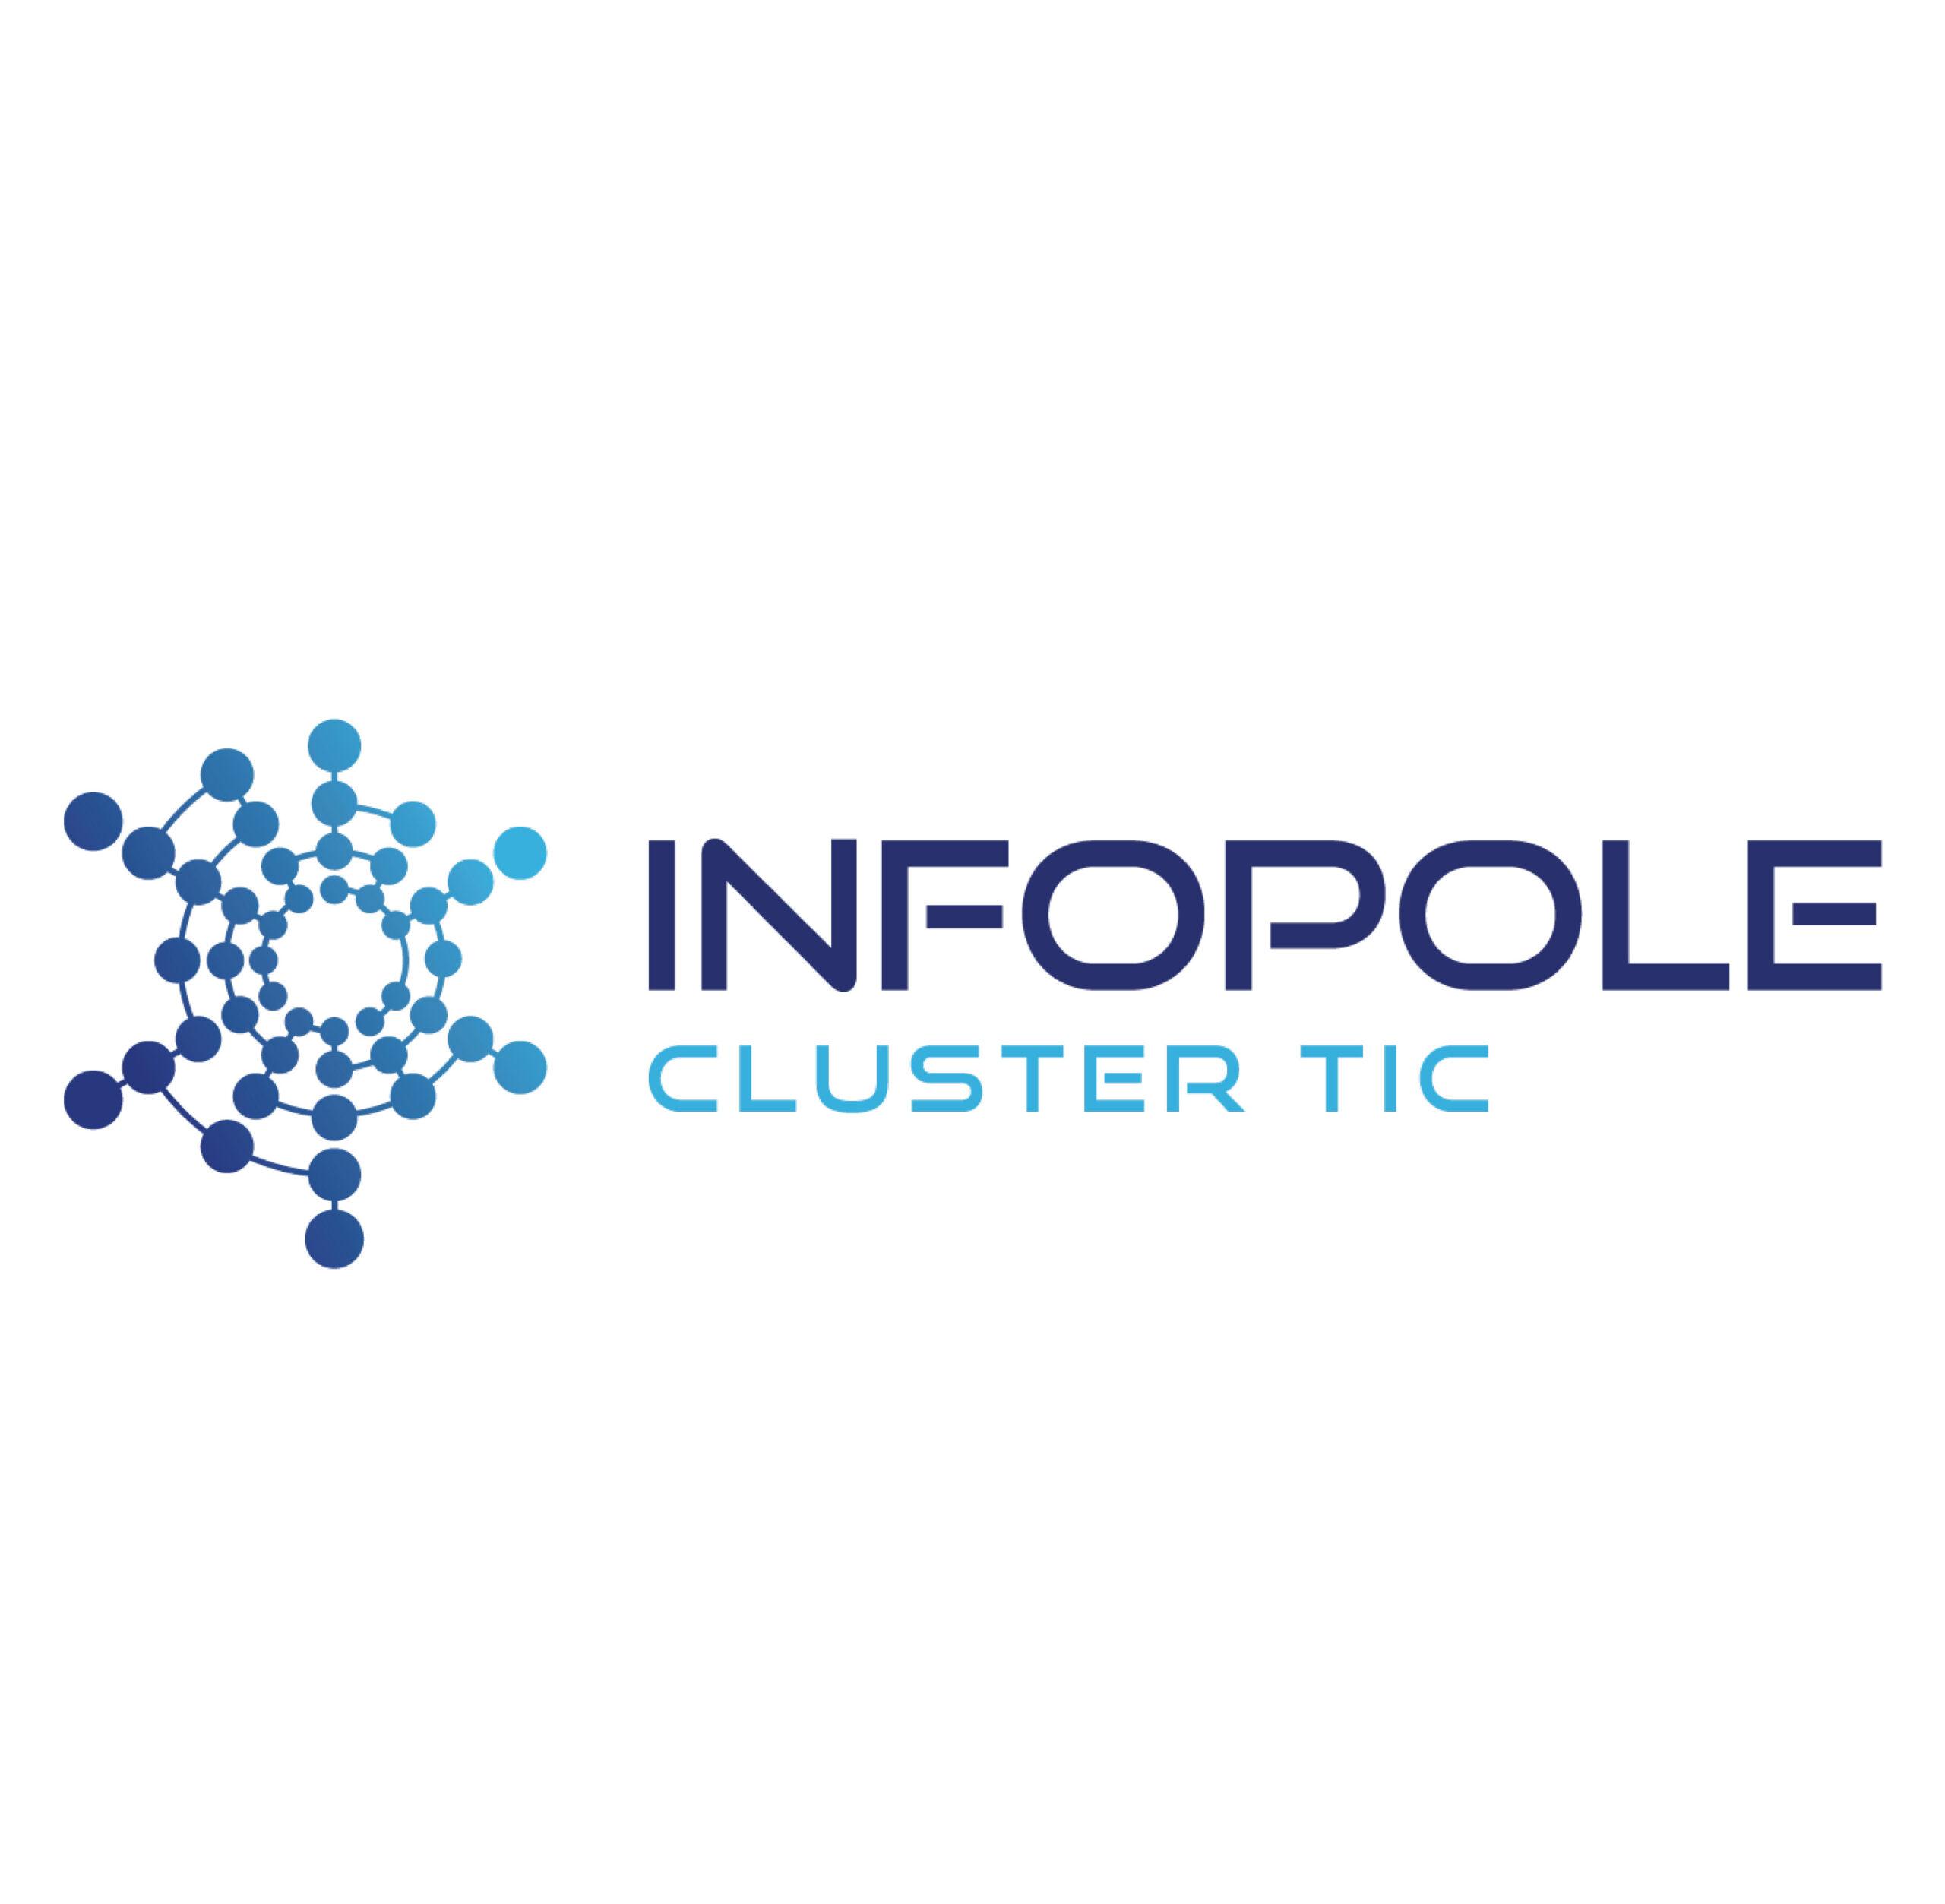 infopole iscf 3 scaled | Industrial Cybersec Forum,